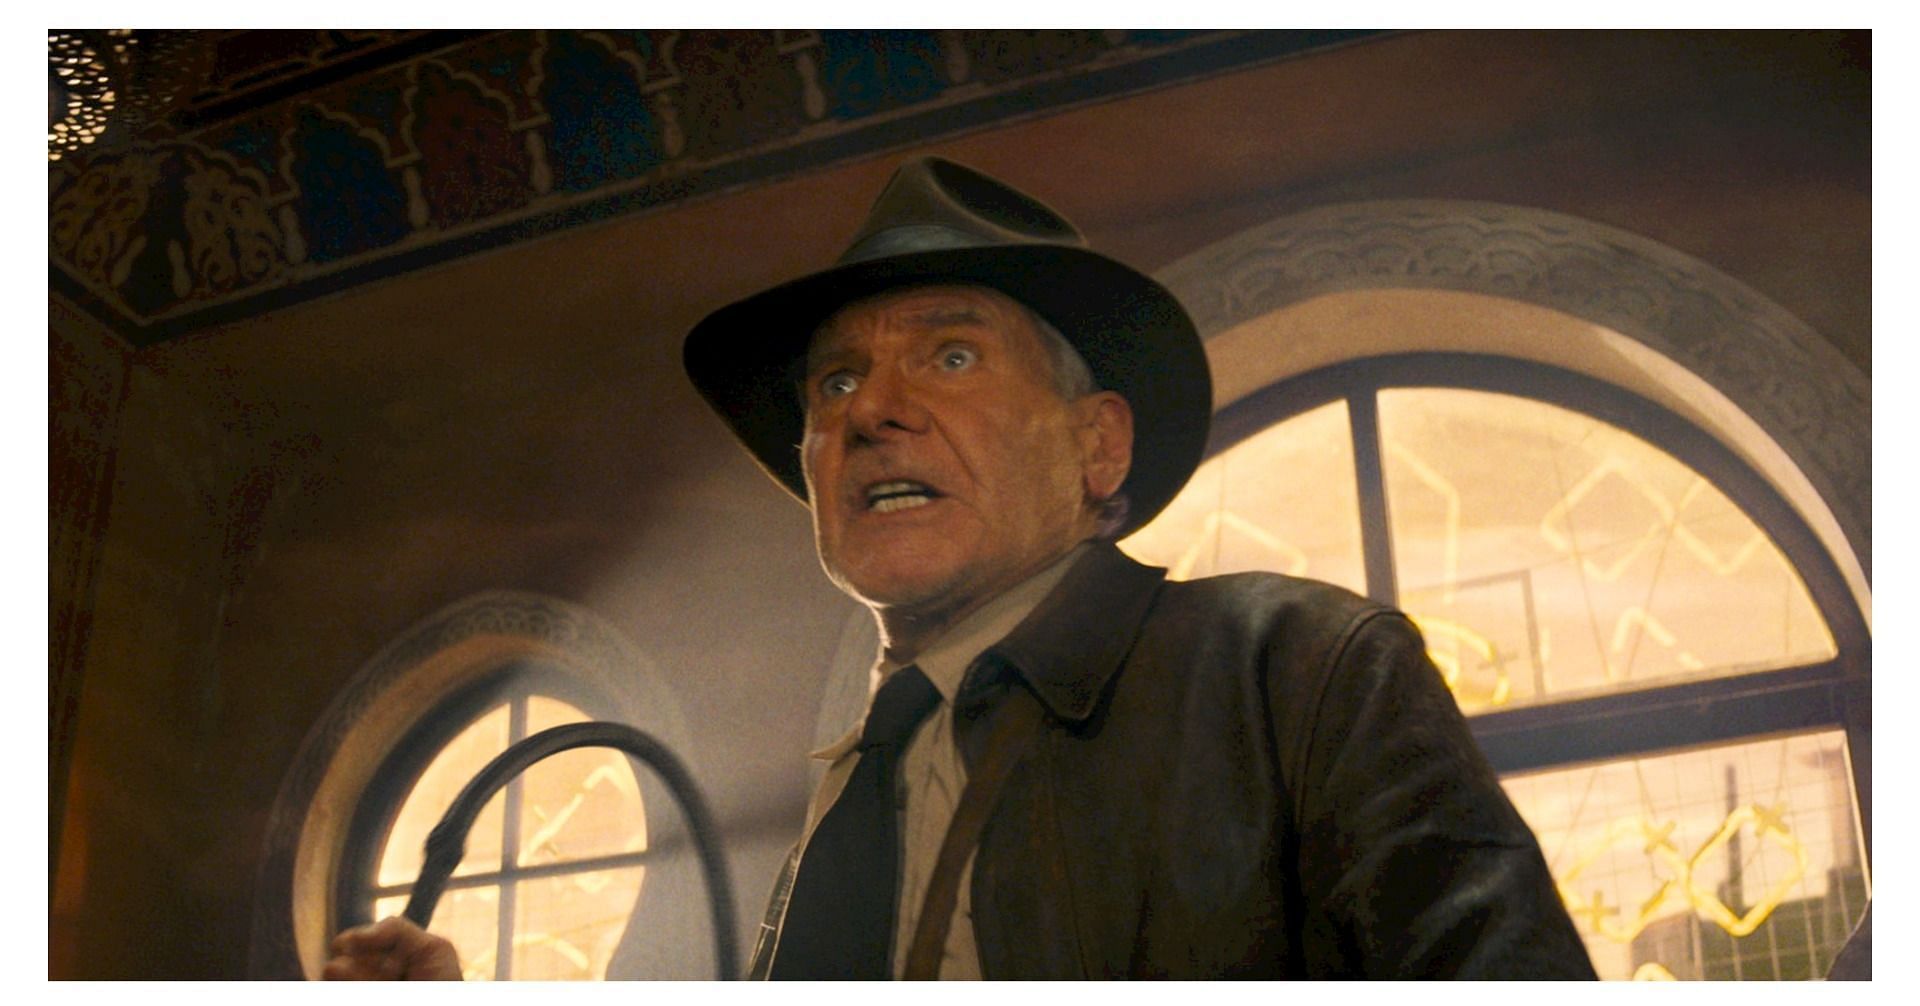 Upcoming Indiana Jones movie draws flak on social media (Image via Getty Images)